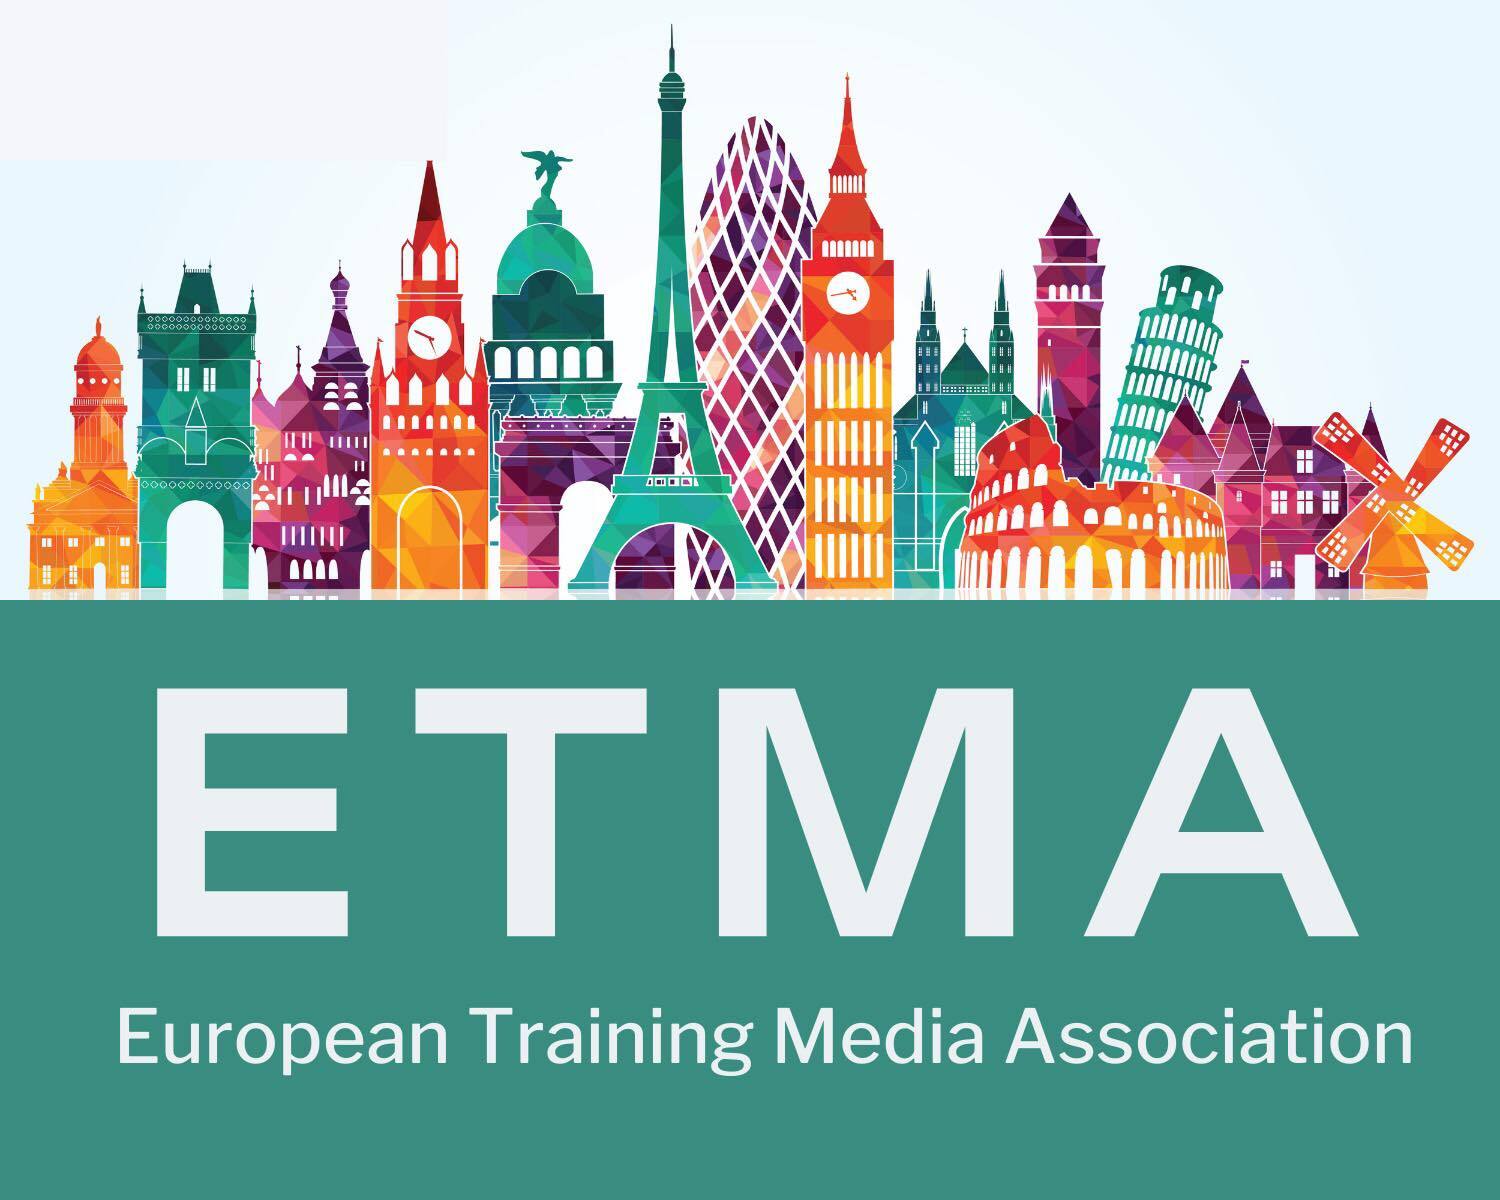 The European Training & Media Association ETMA